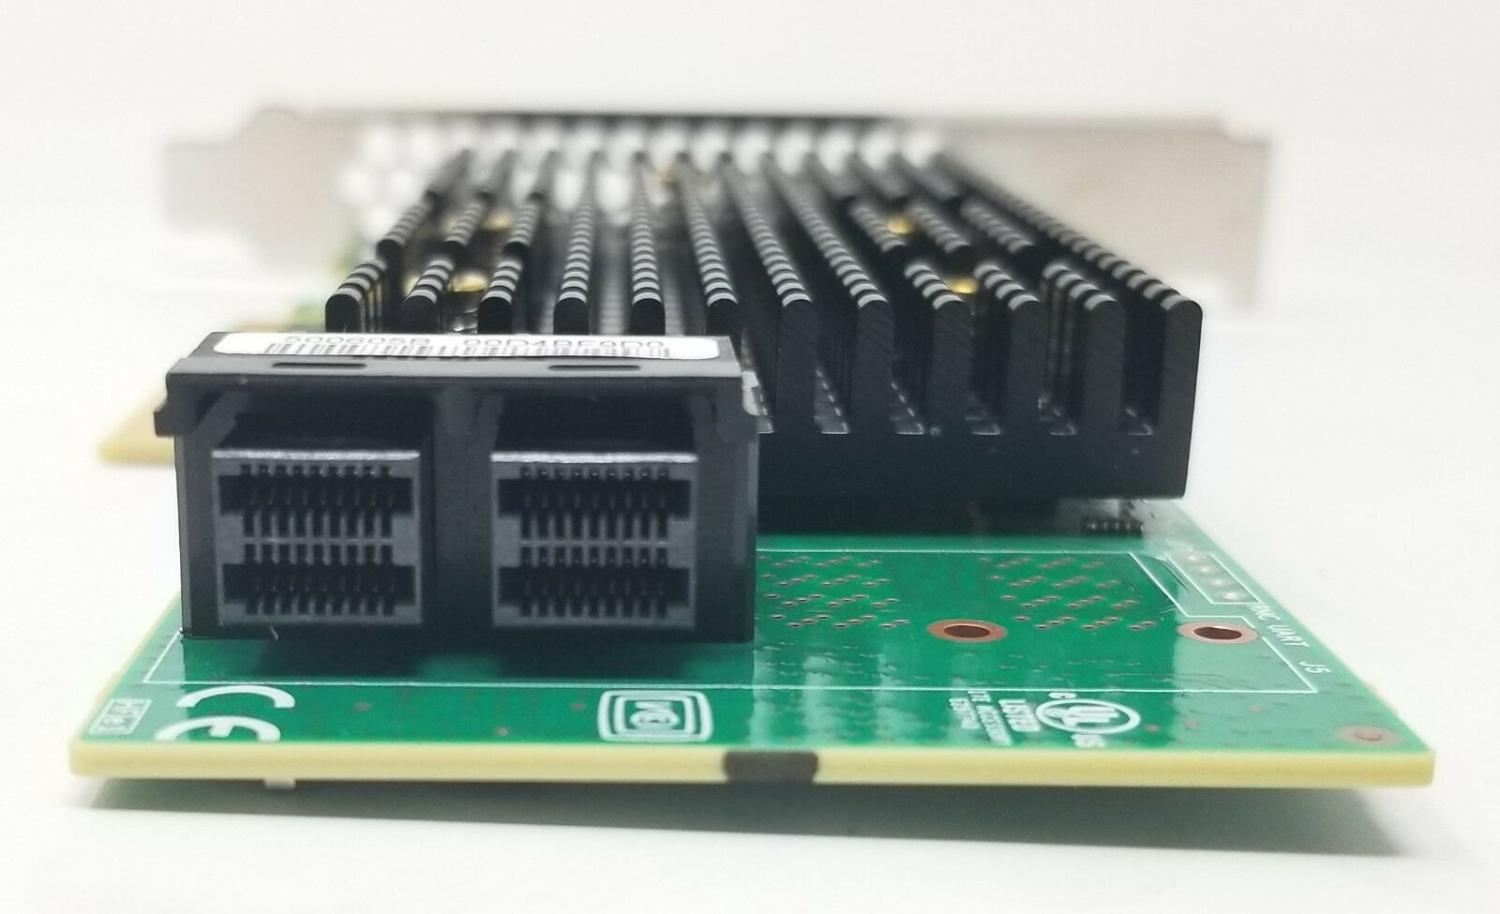 LSI Рейдконтроллер SAS PCIE 8P 05-50008-02